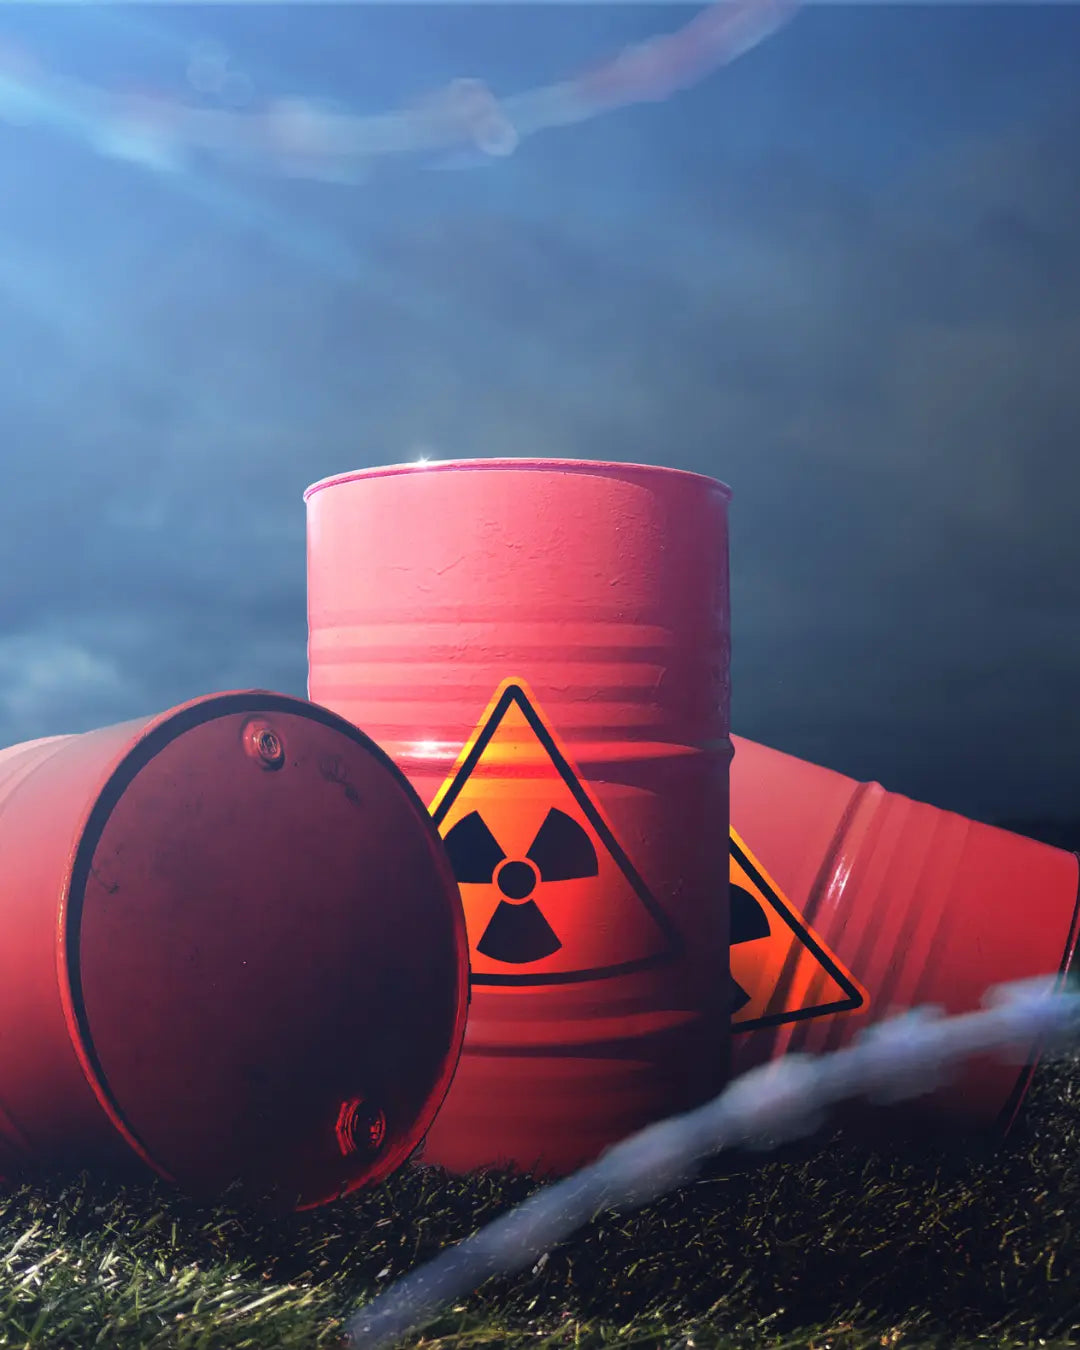 barrels full of toxic material